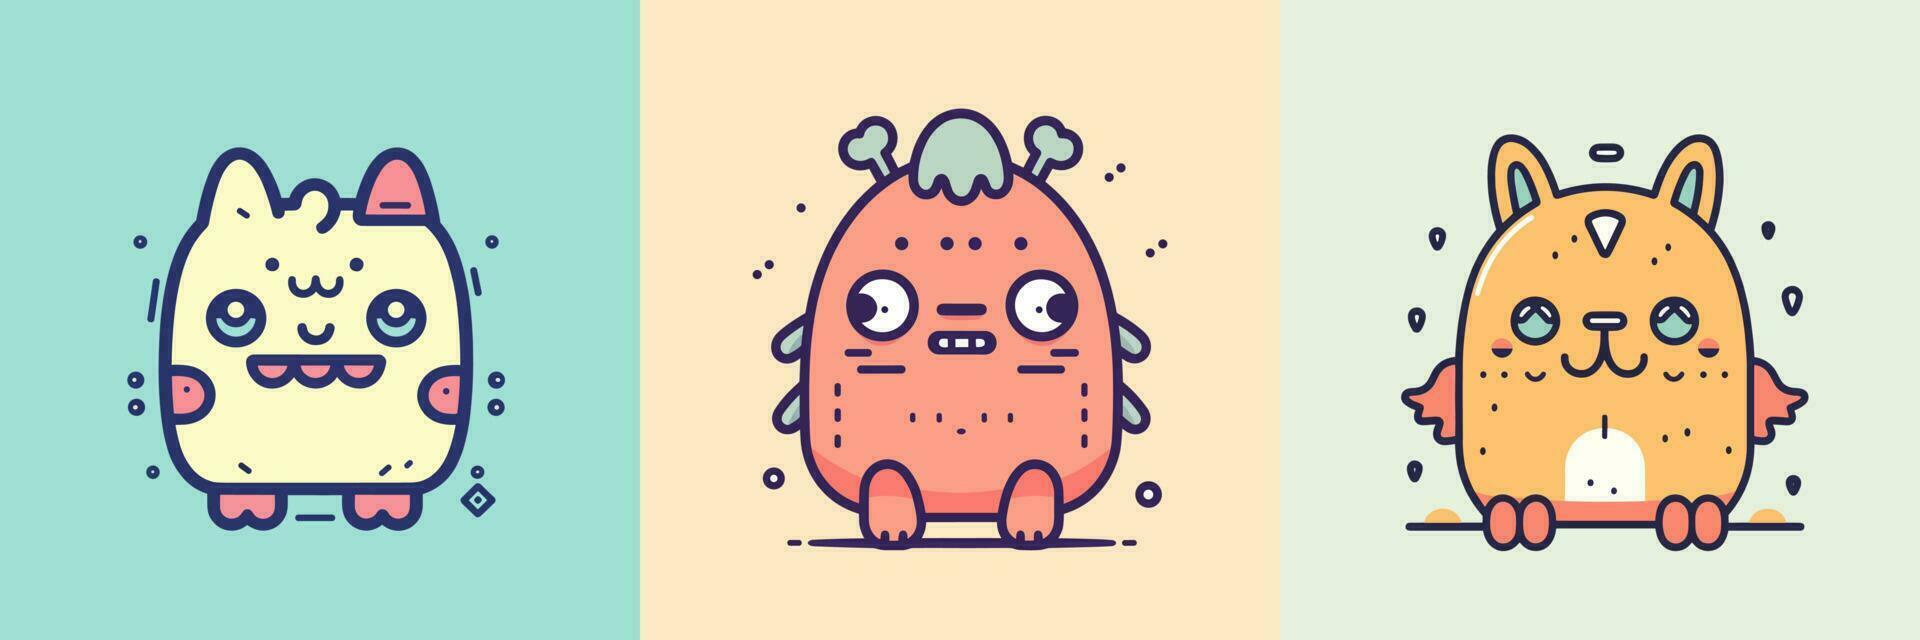 Cute mascot monster kawaii character cartoon illustration set collection vector